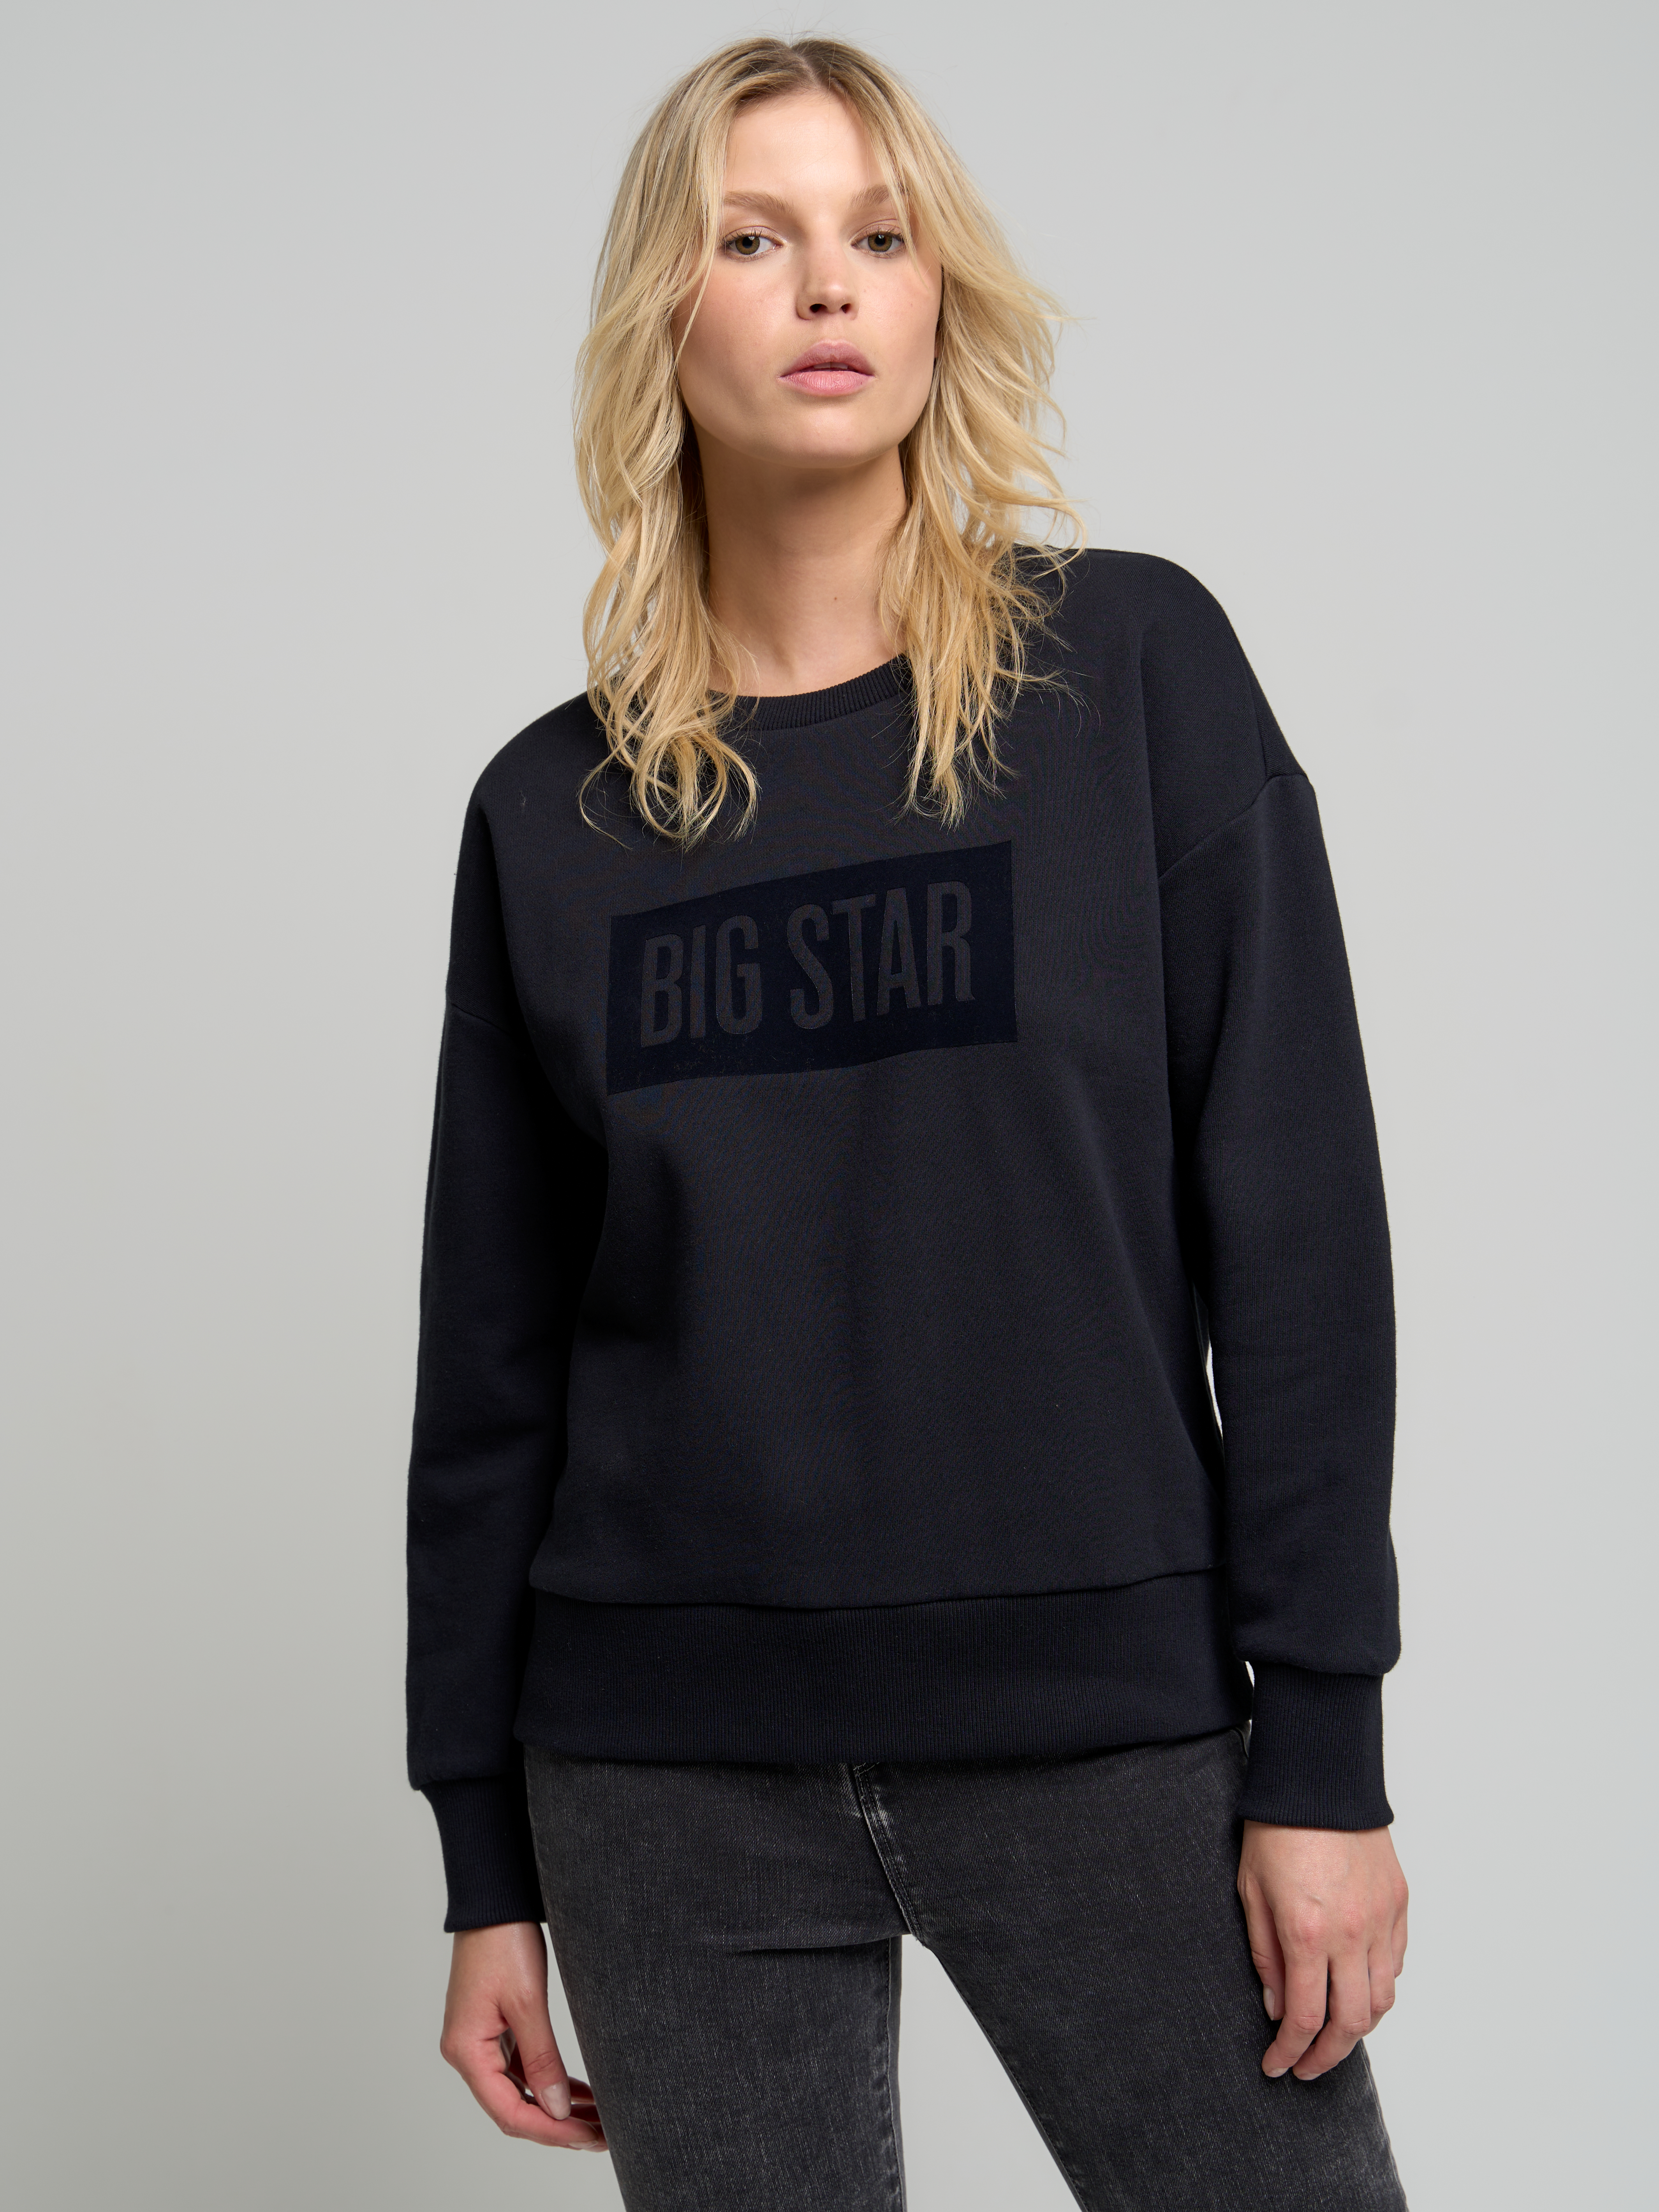 Big Star Woman's Sweatshirt 171490 Black